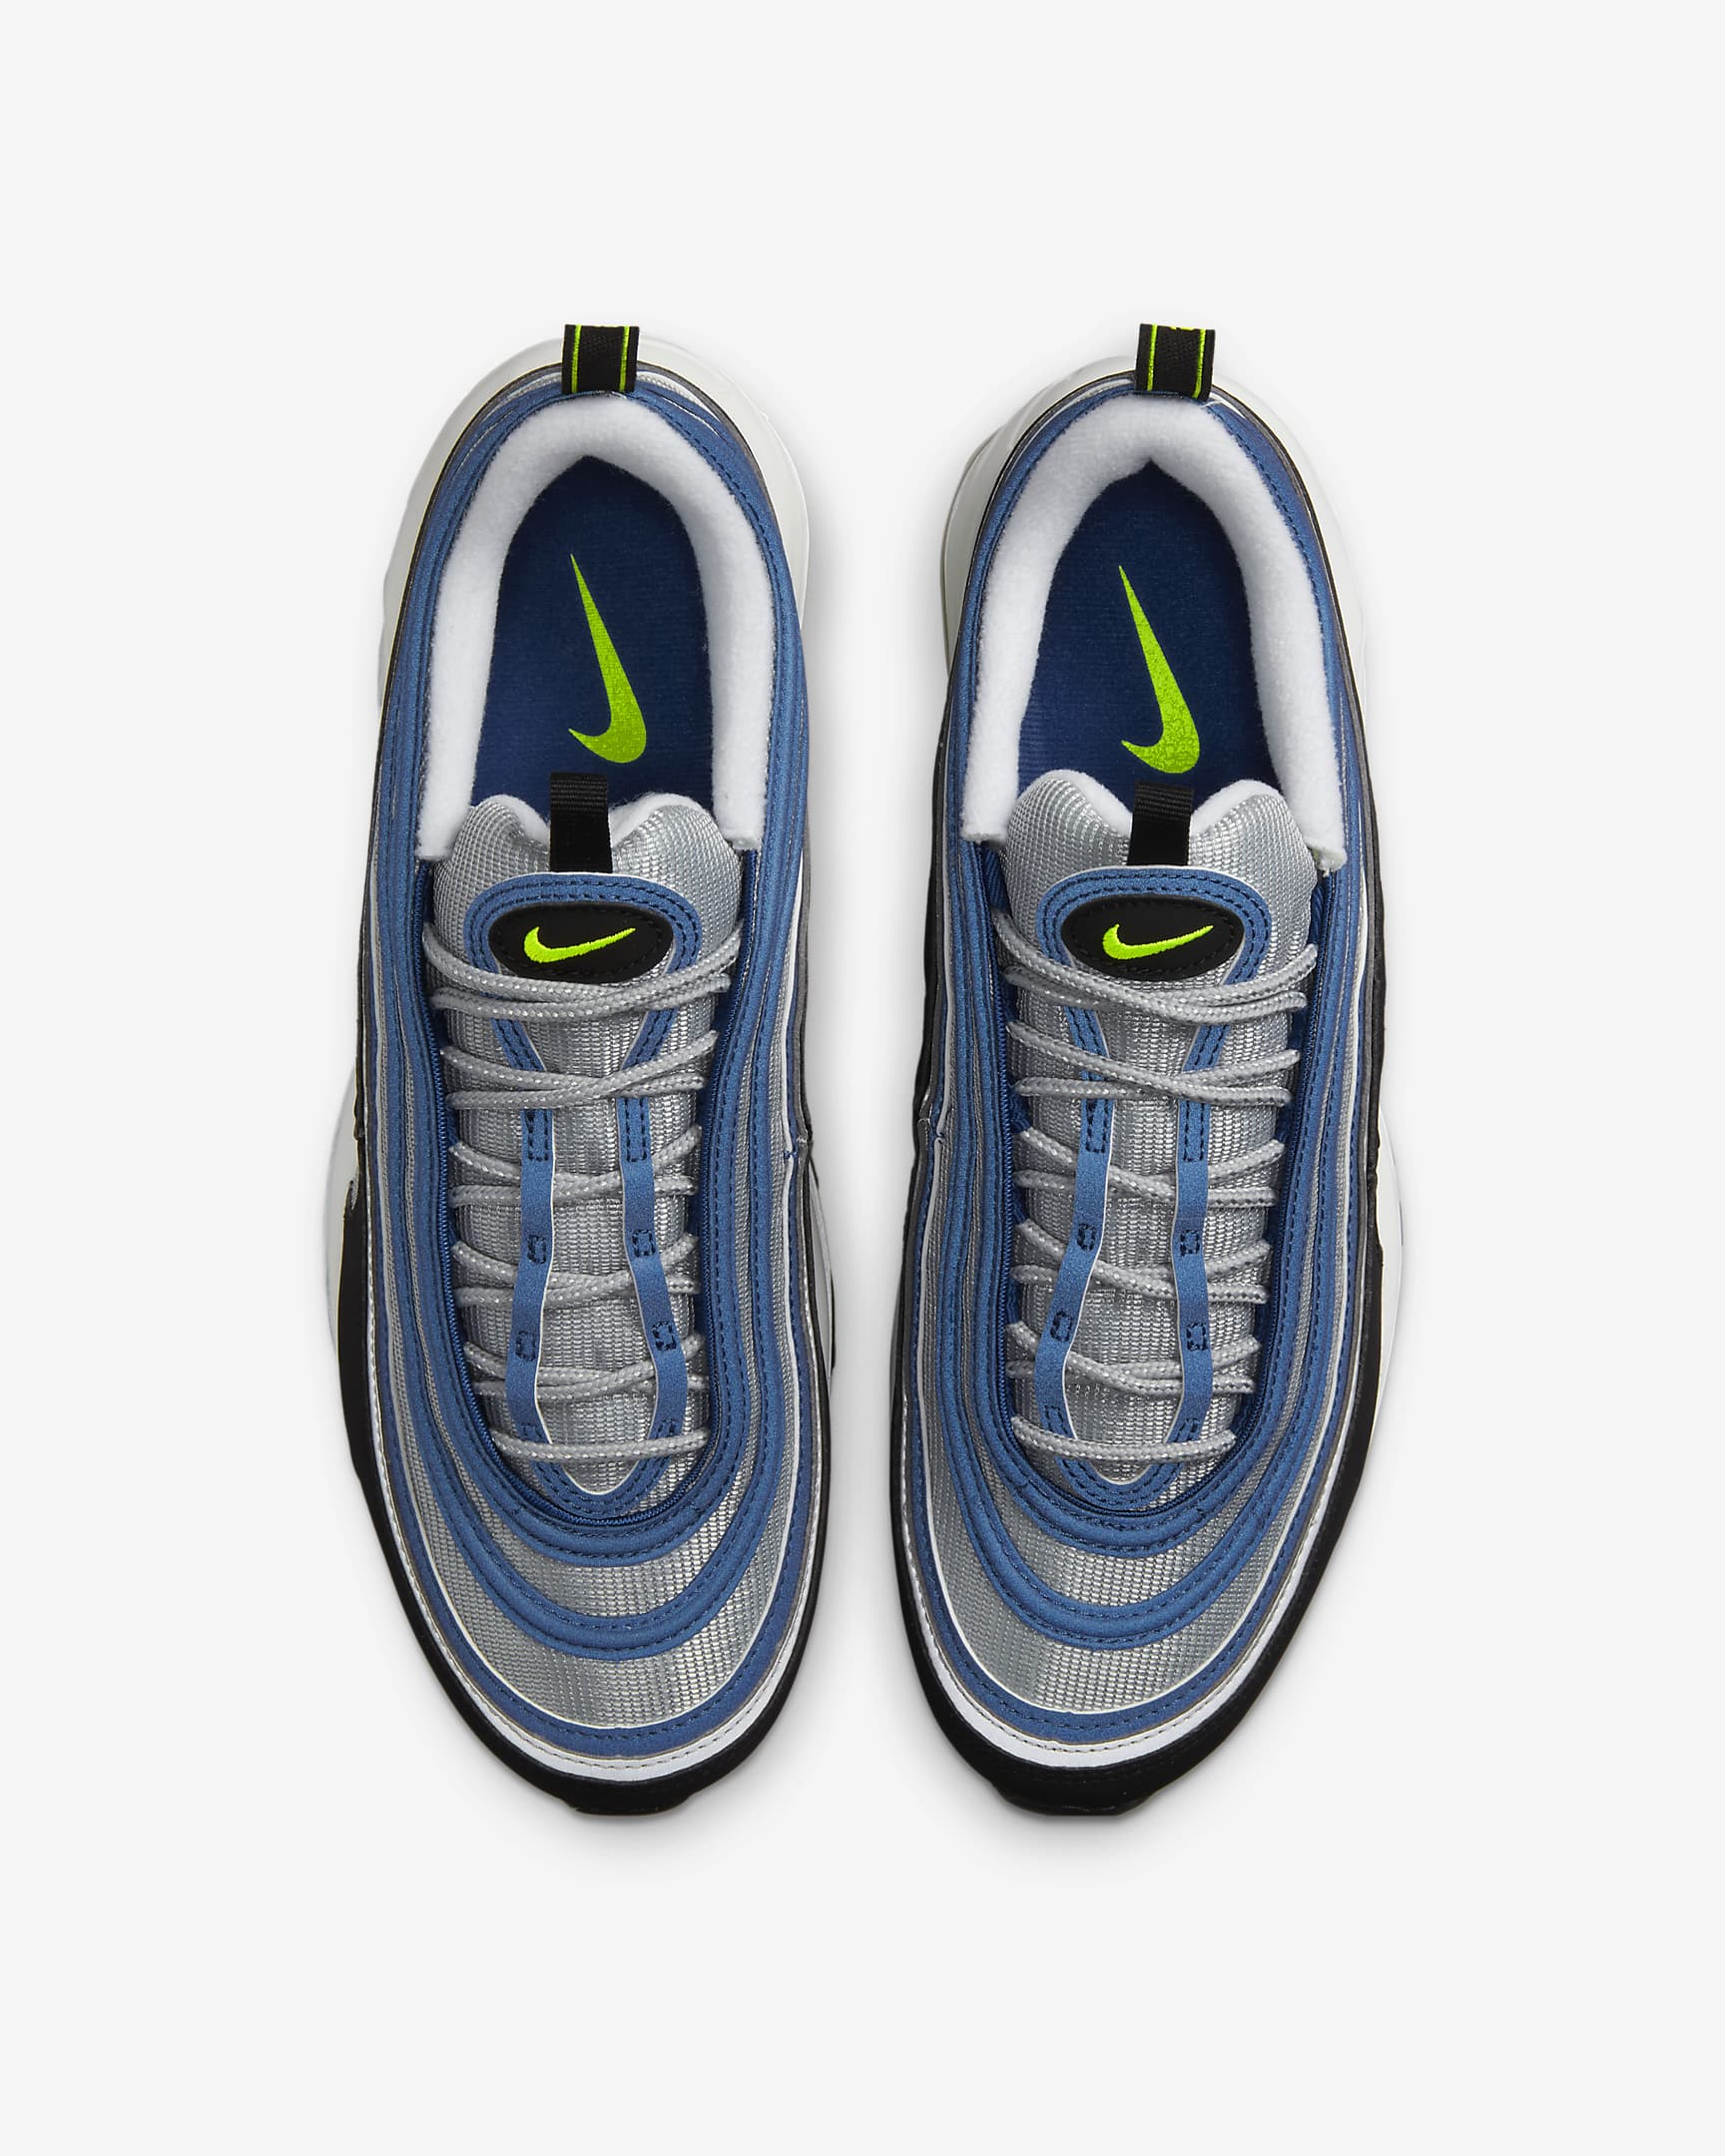 Sneak Peek Inside: Nike Air Max 97 OG Men’s Shoes Review Unlocks the Shoe’s Potential!